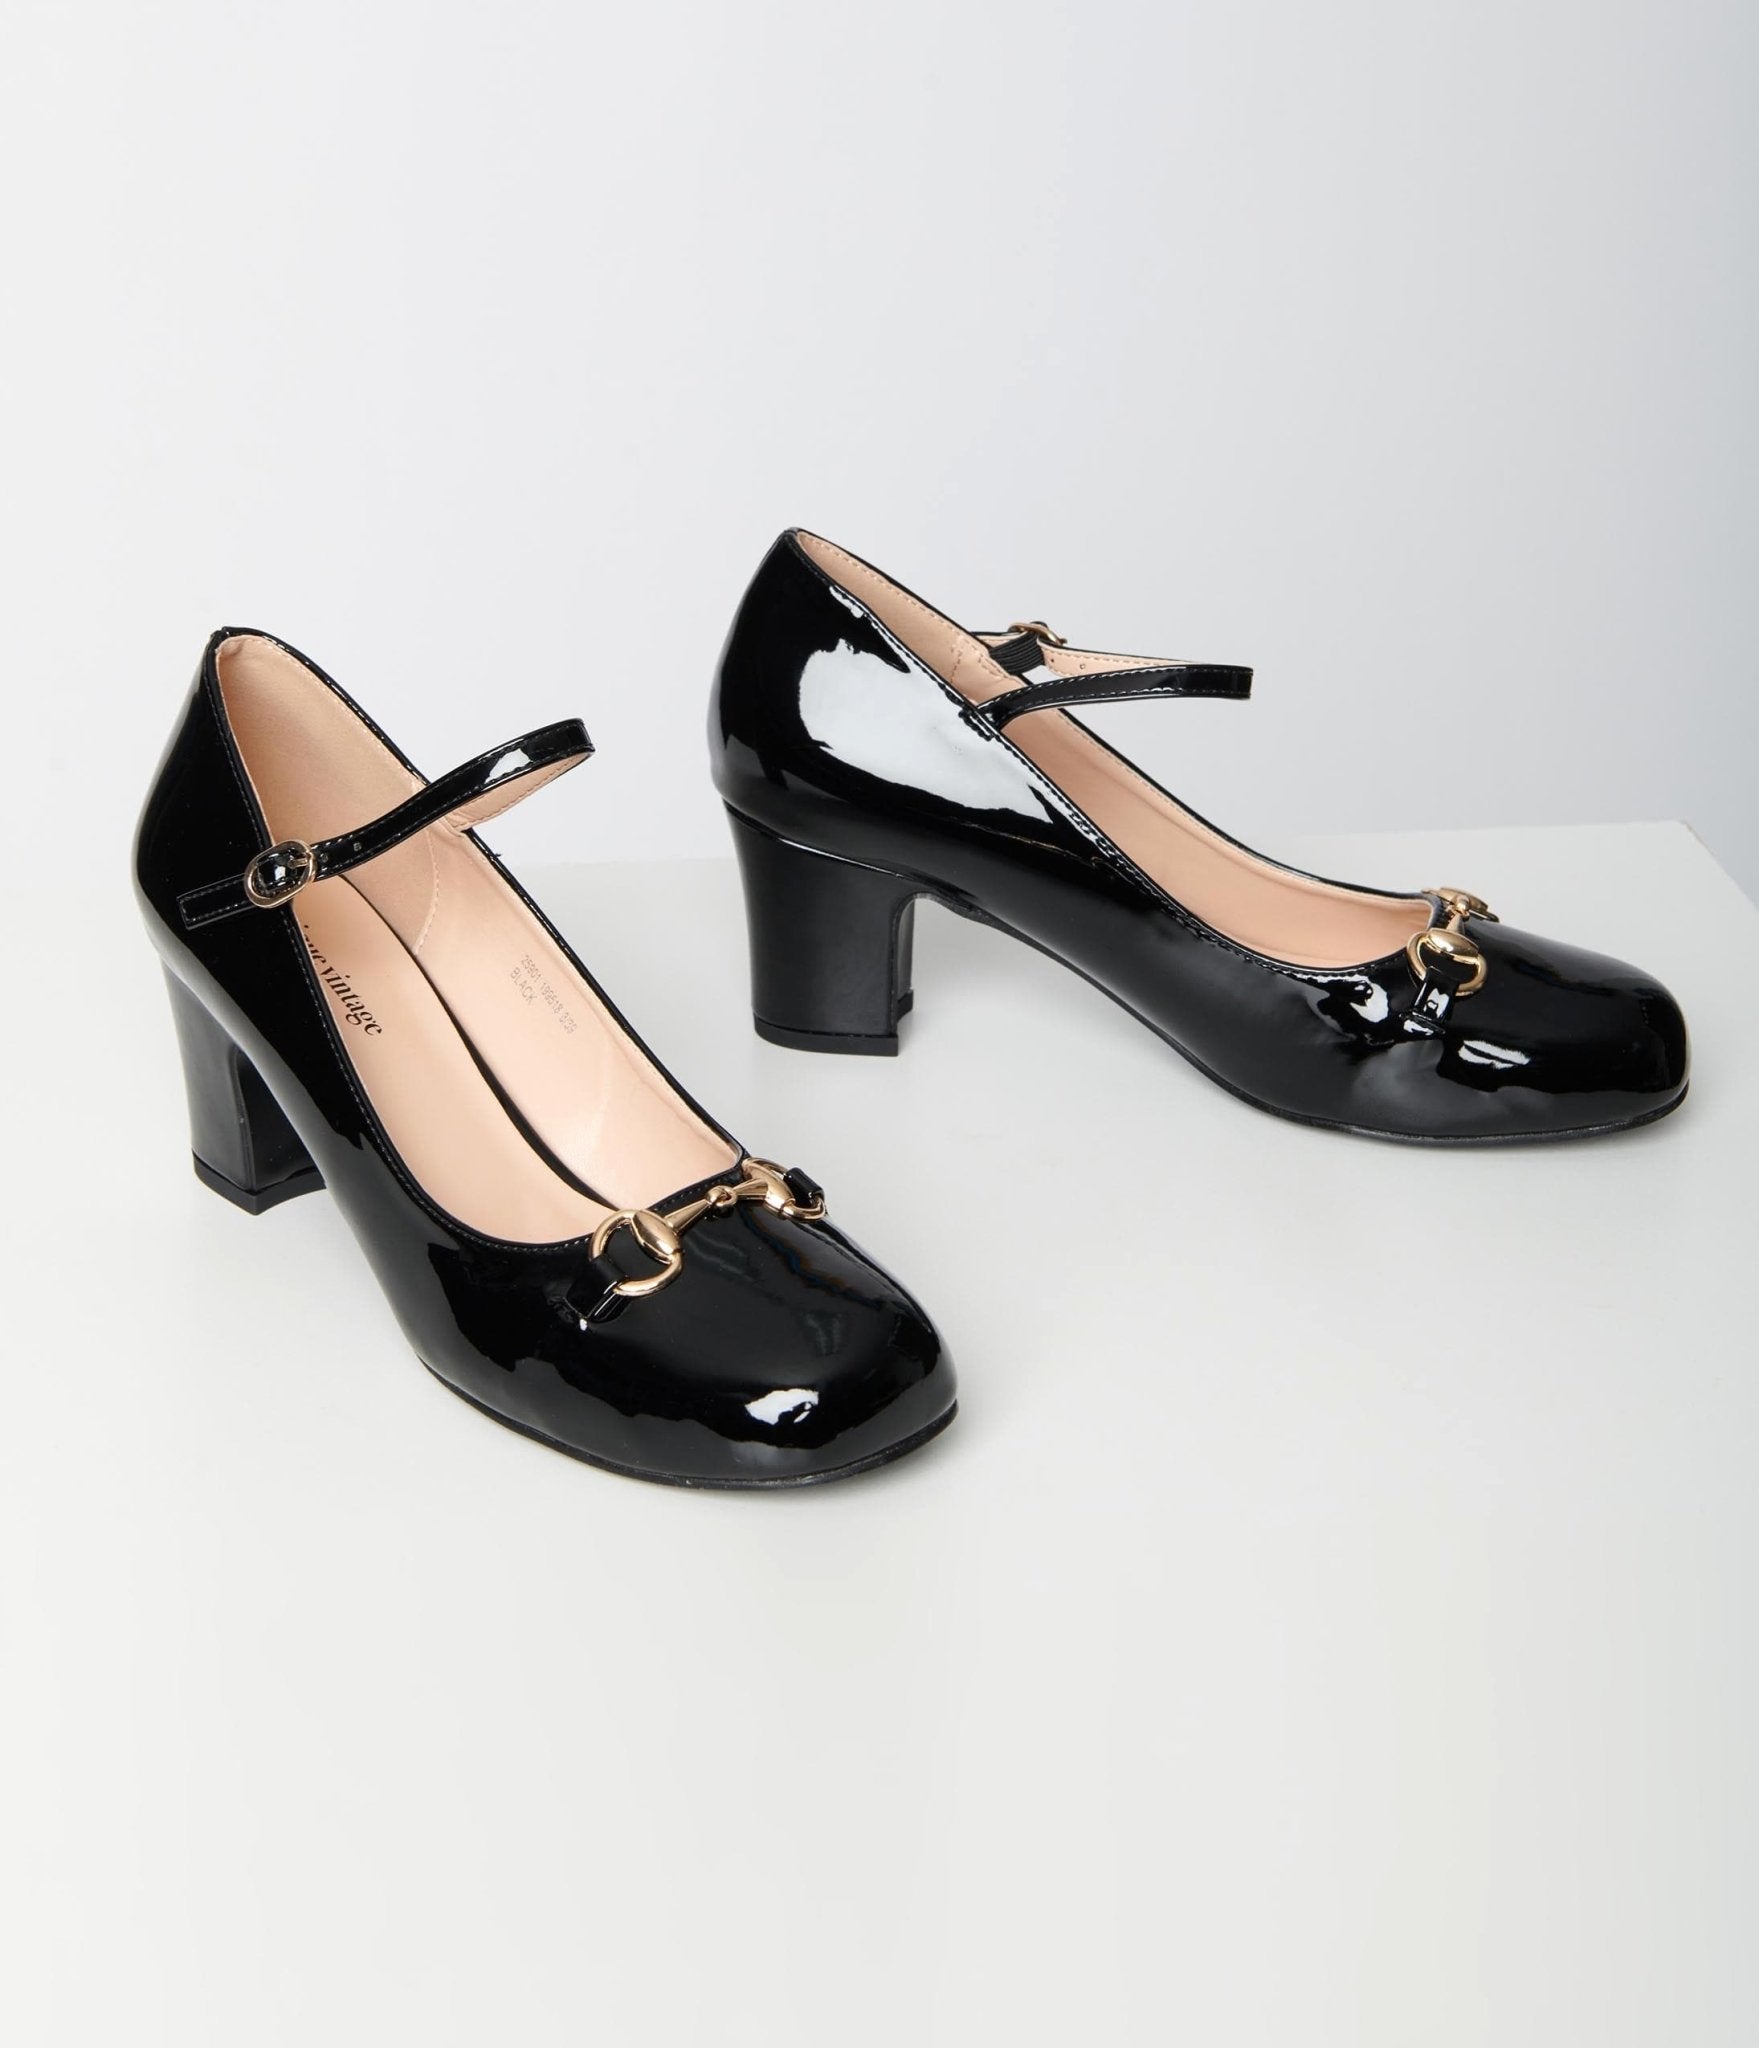 Buy Aldo Women's Black Mary Jane Shoes for Women at Best Price @ Tata CLiQ